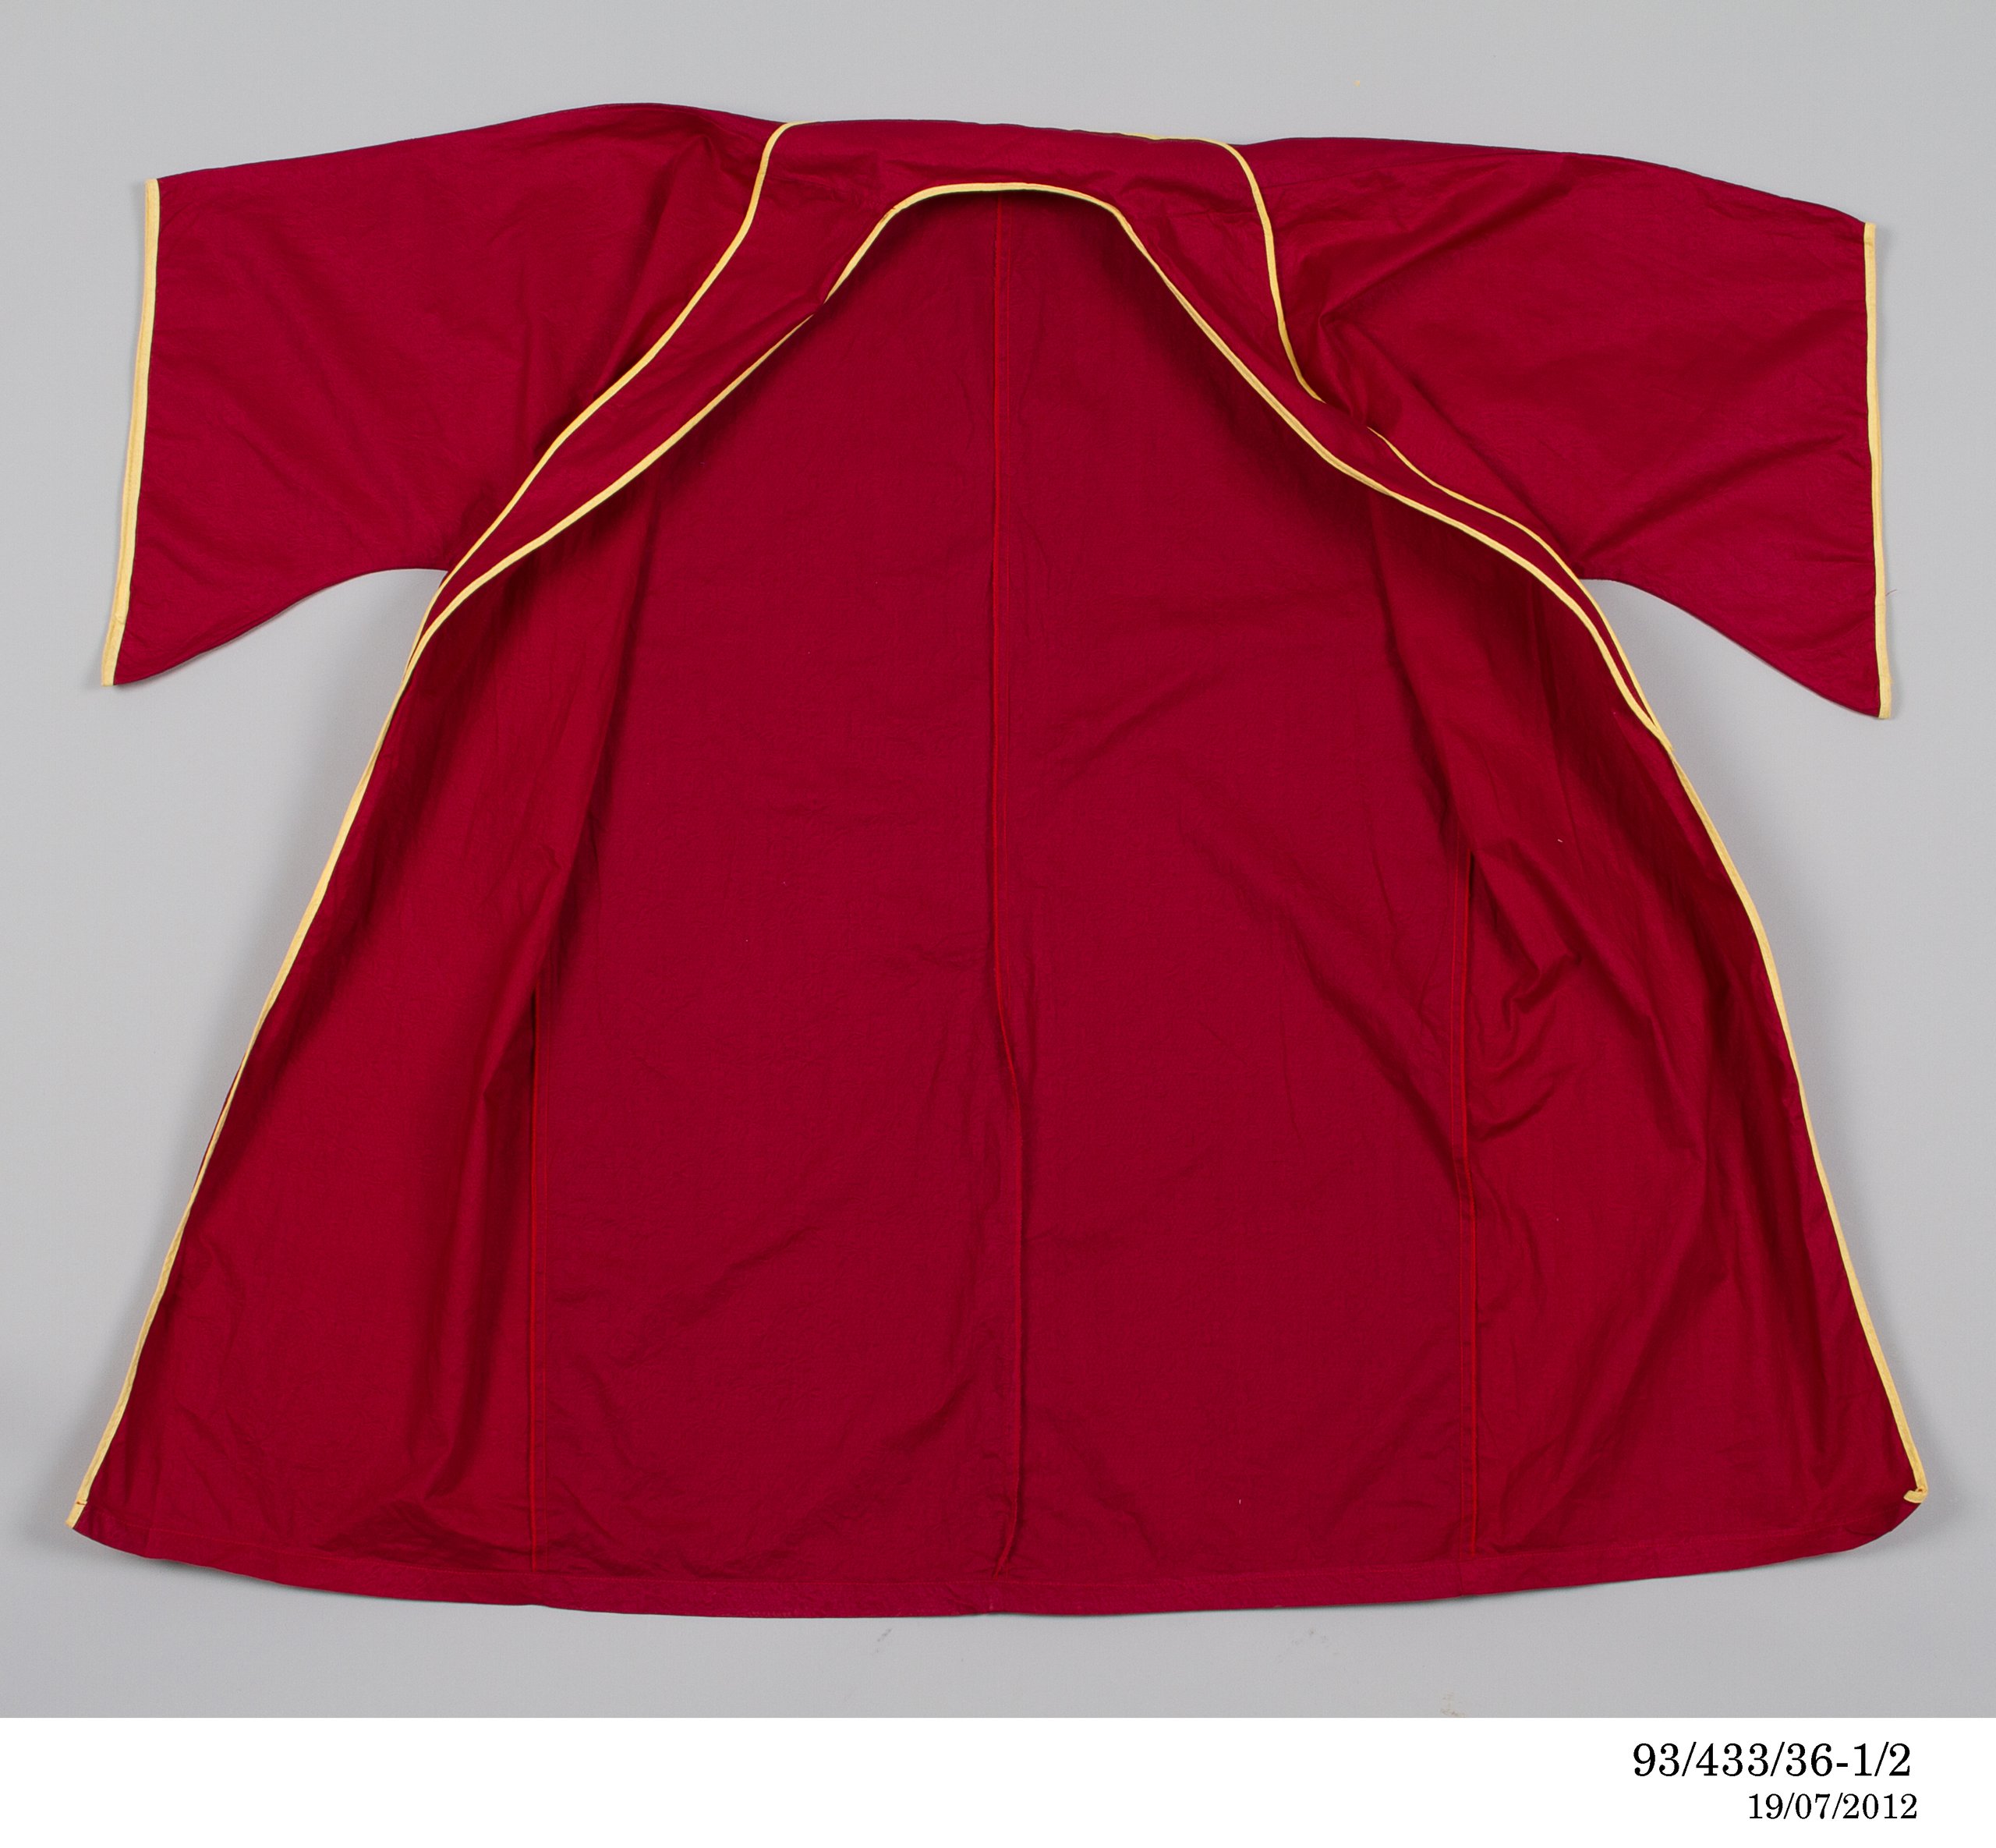 'Samurai the master swordsman' children's fancy dress costume